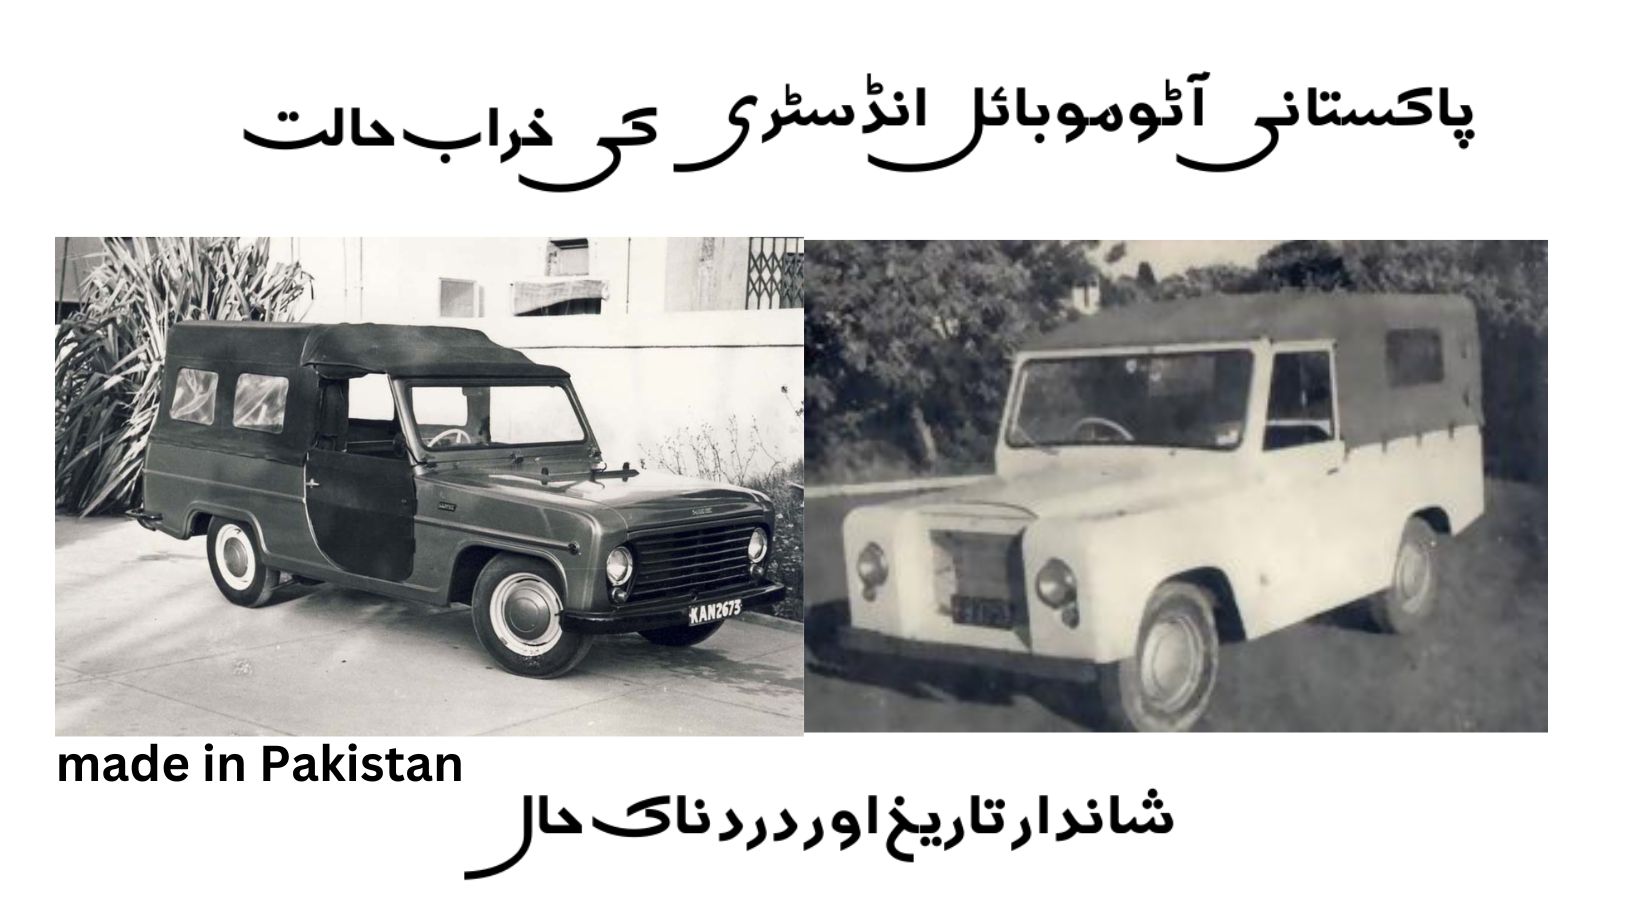 Pakistan's Automobile Industry